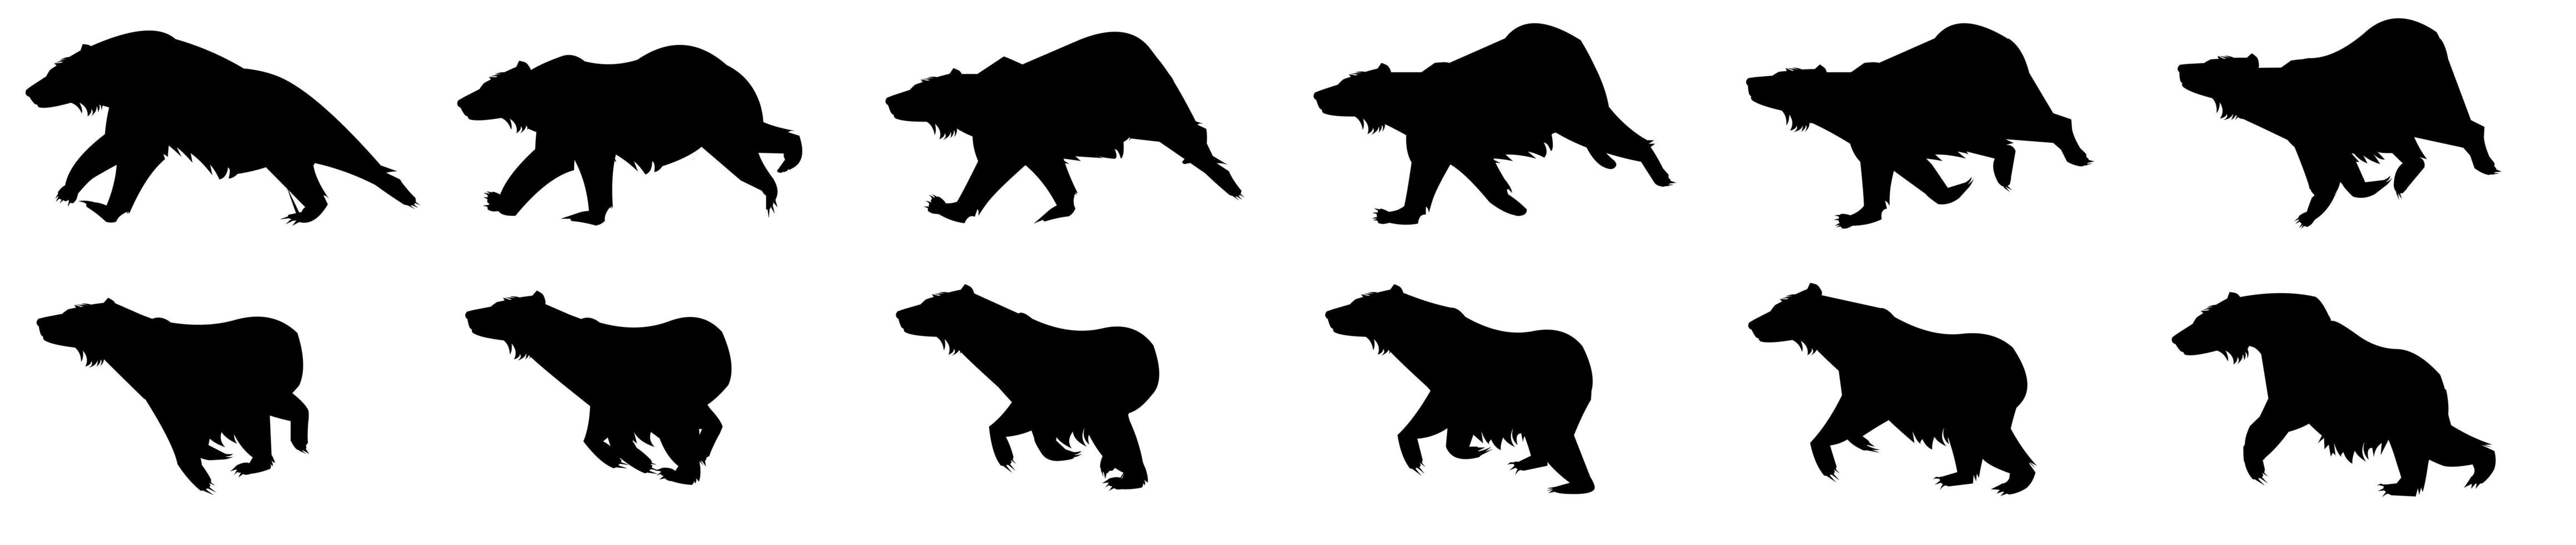 Bear Run Cycle vector